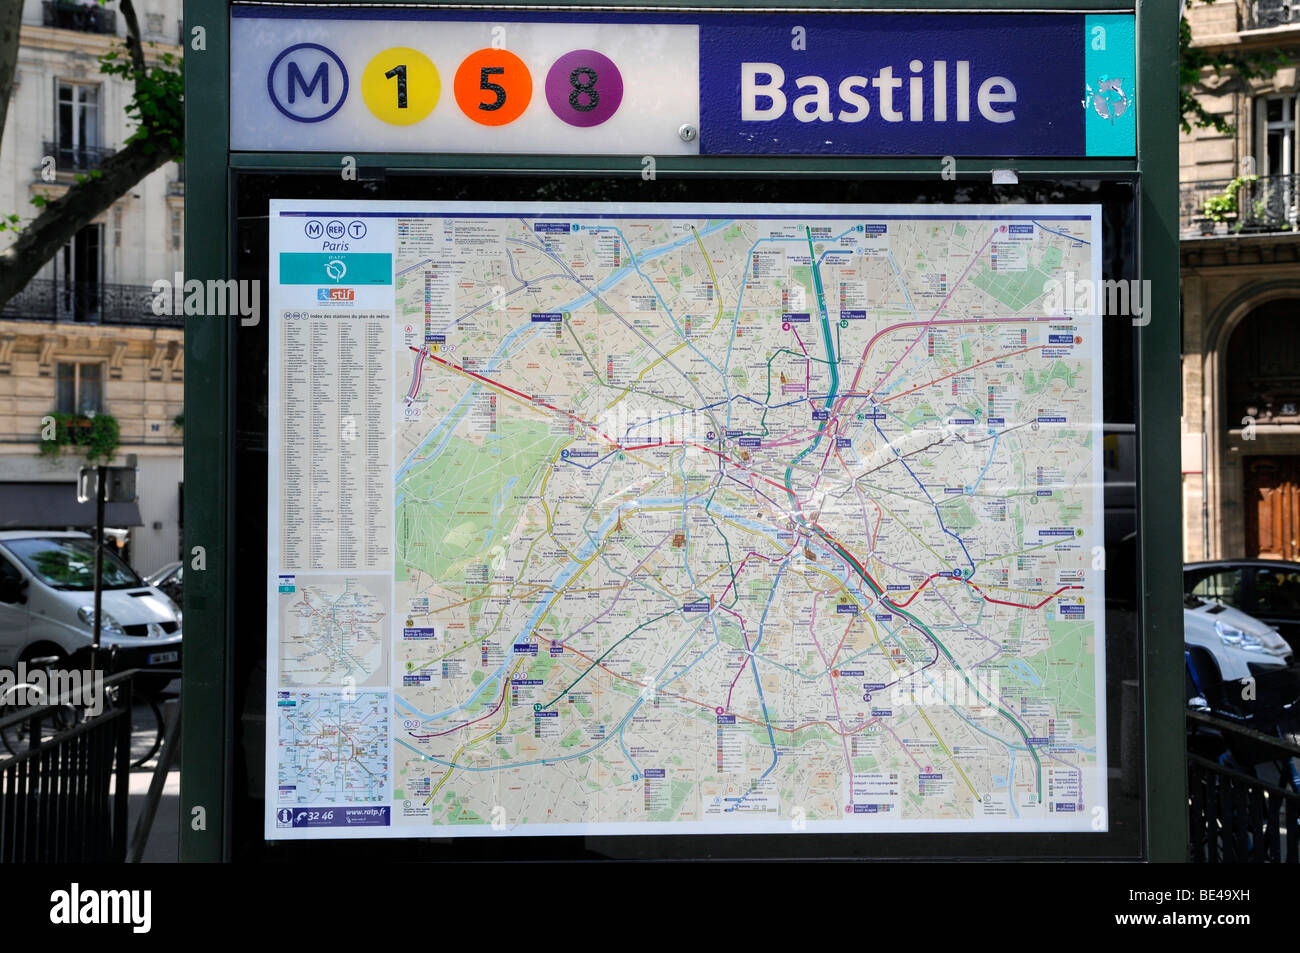 Metro sign, Bastille, Paris, France, Europe Stock Photo